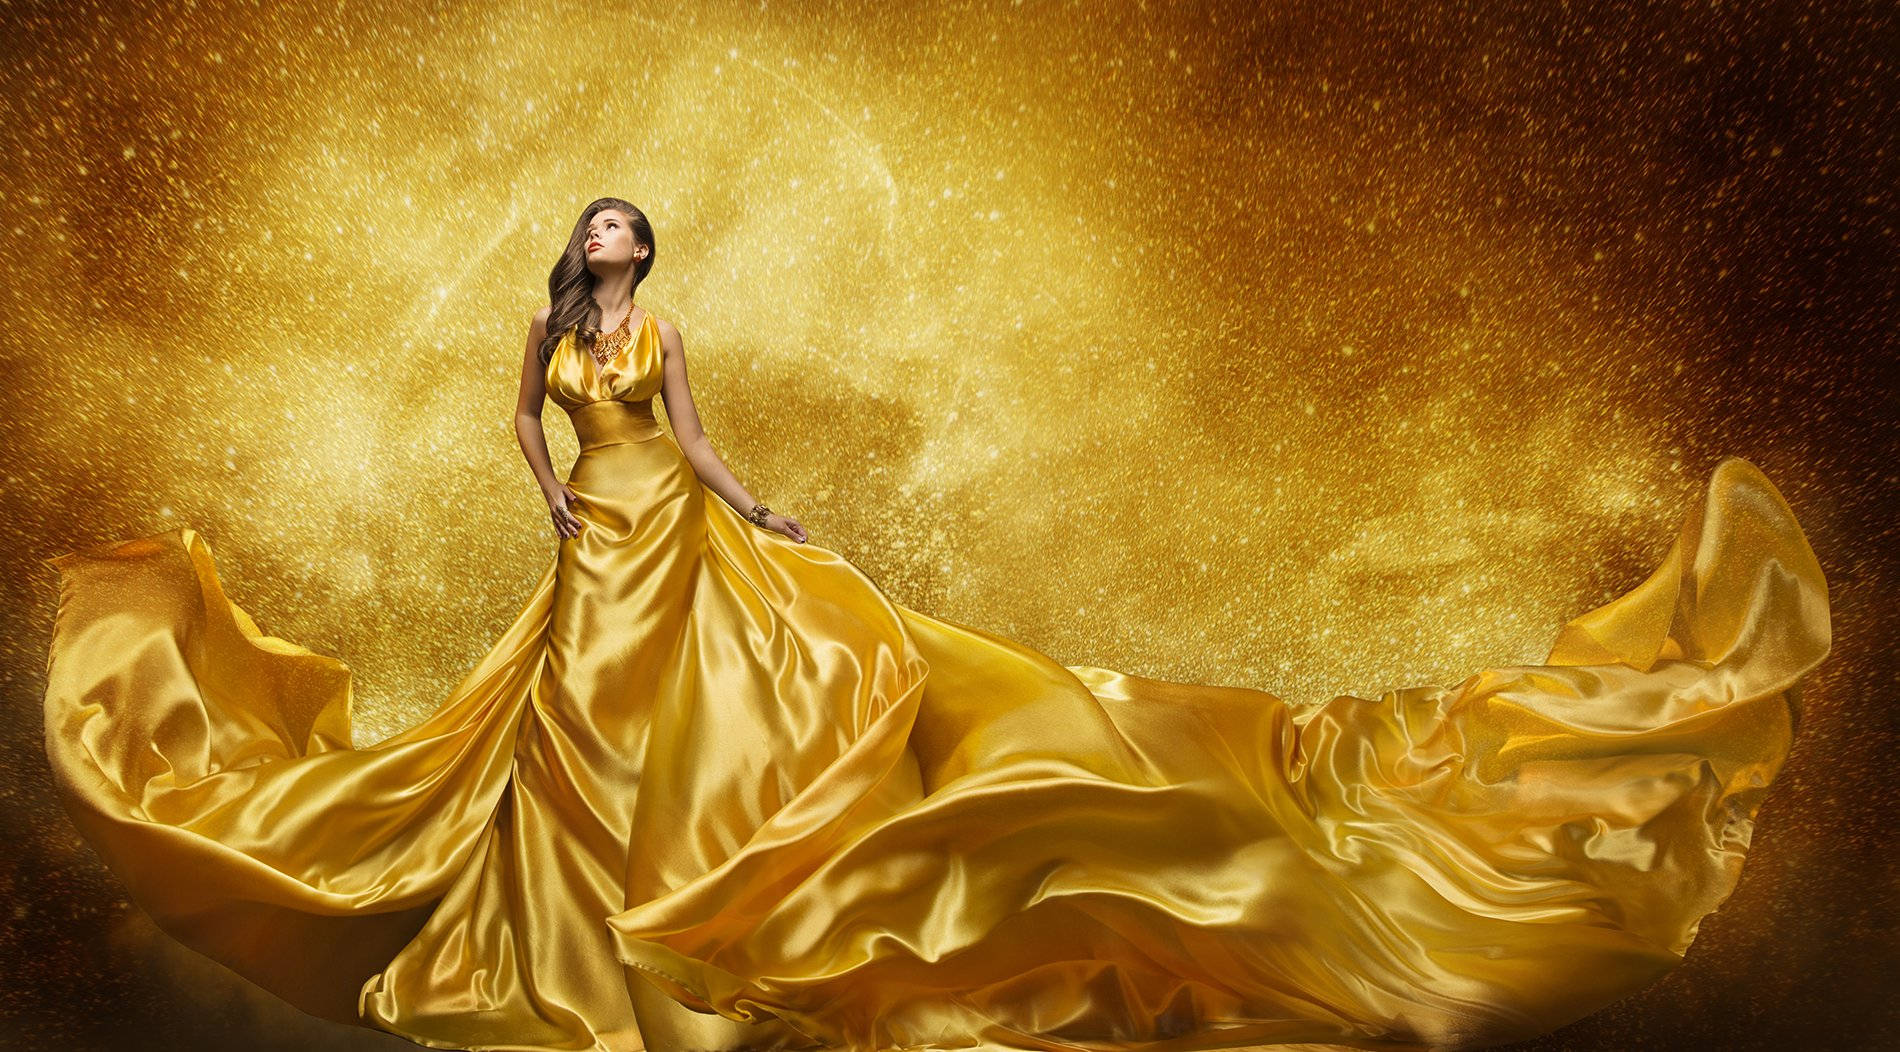 Vestidode Cetim Dourado. Papel de Parede